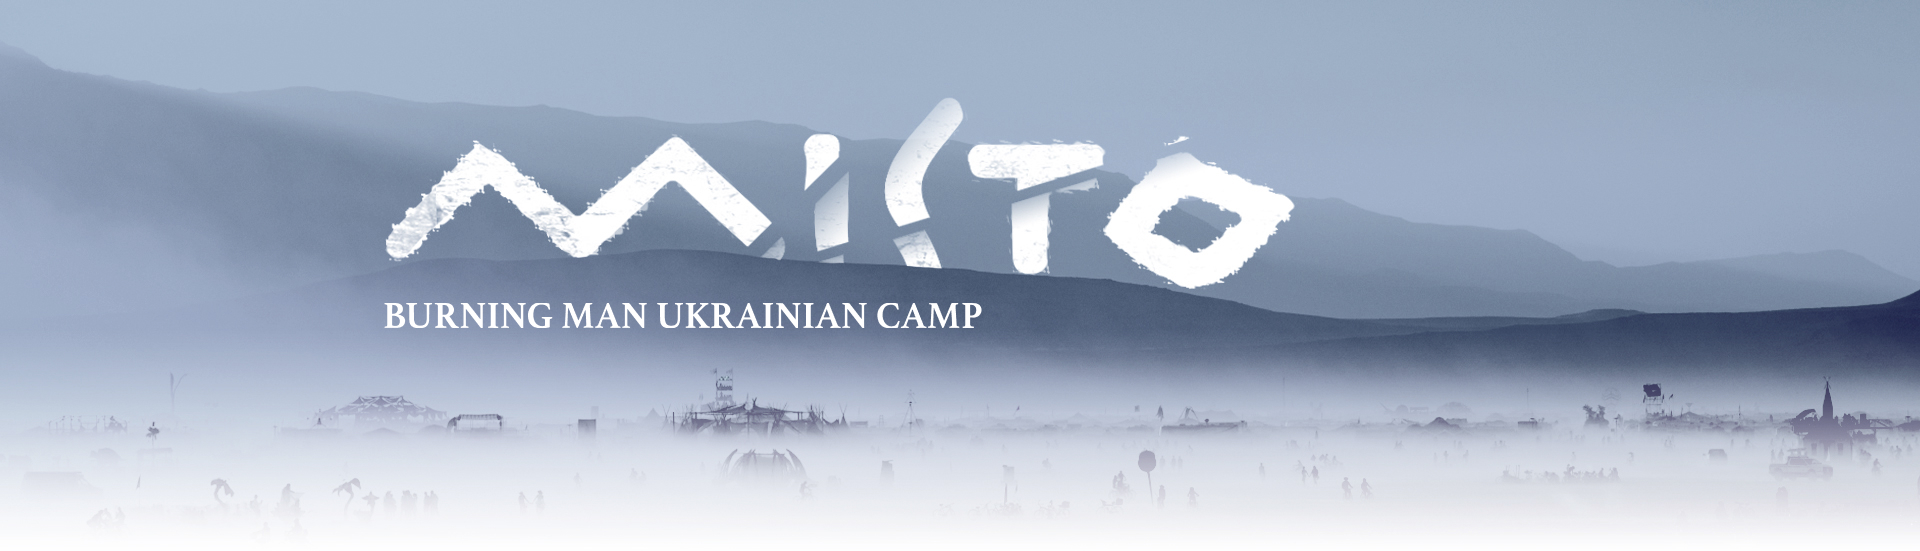 Misto Burning Man Ukrainian Camp